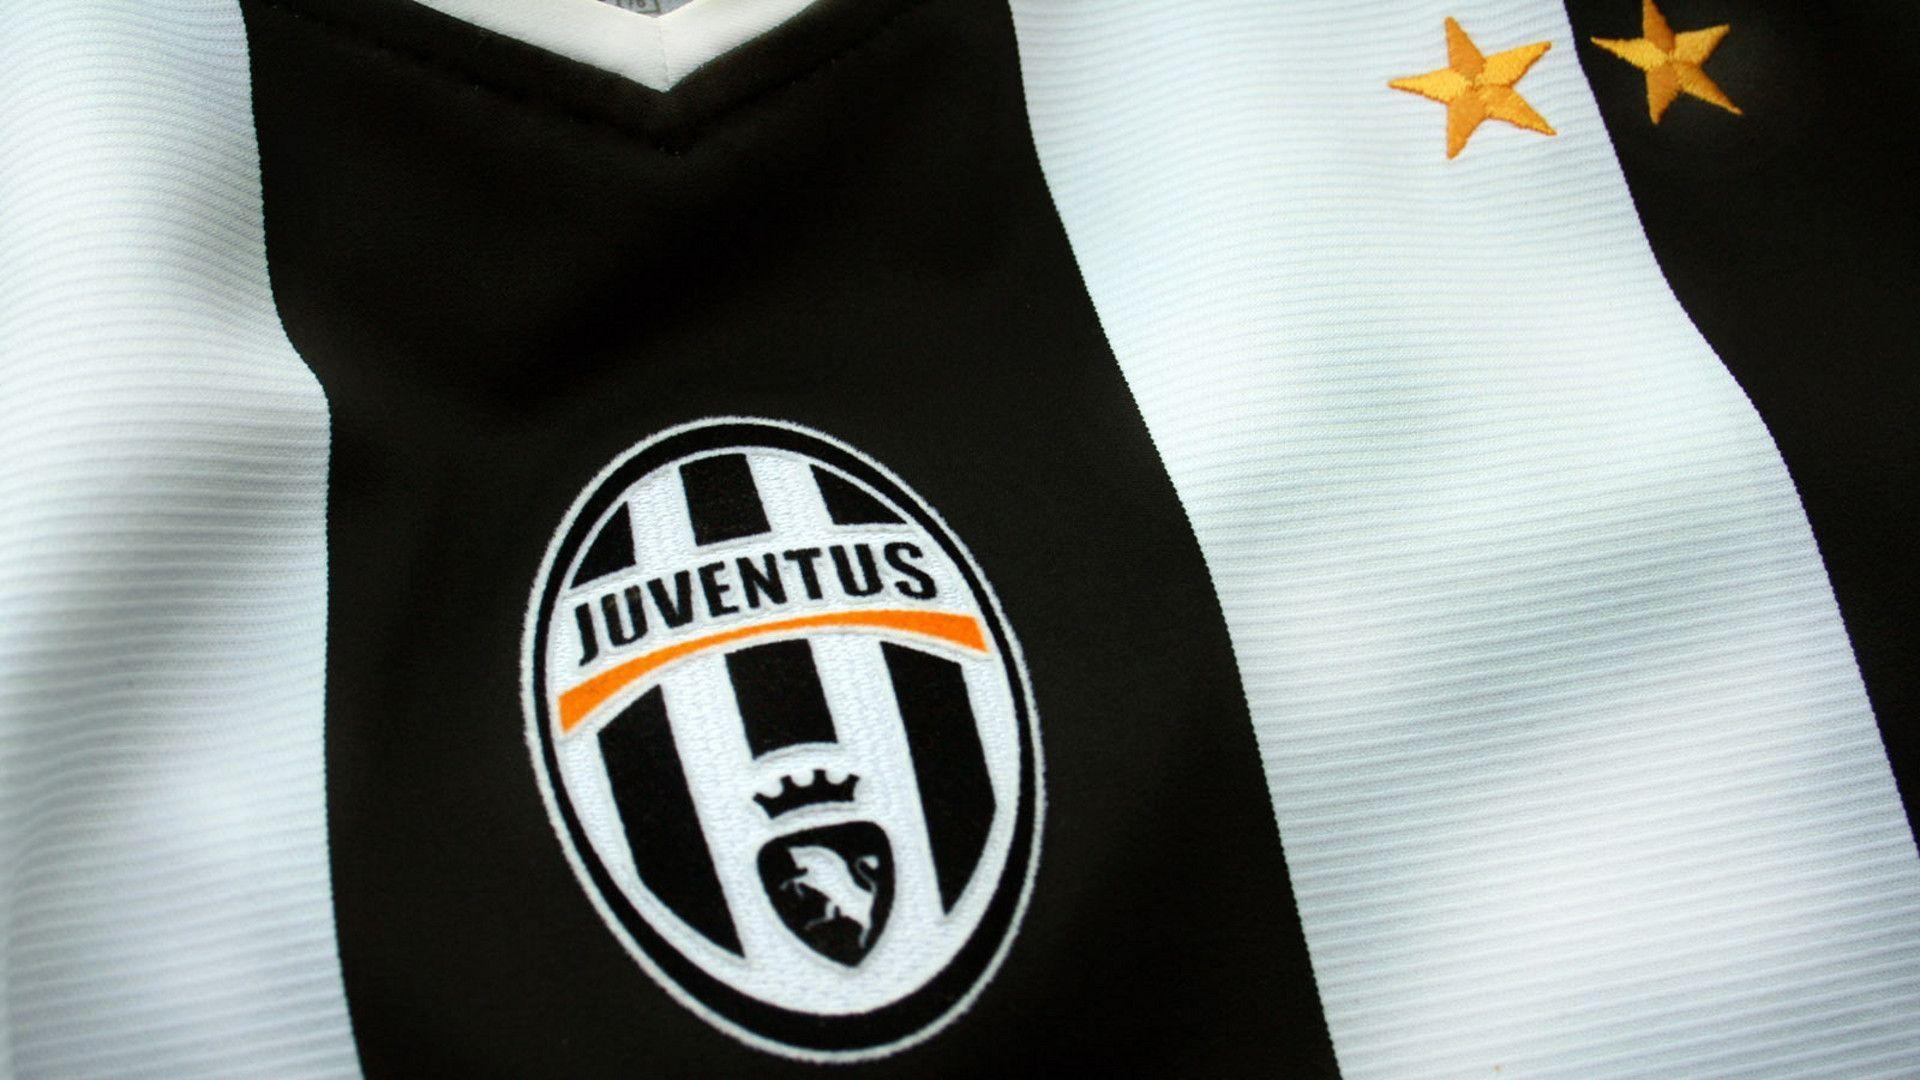 Juventus. Widescreen and Full HD Wallpaper